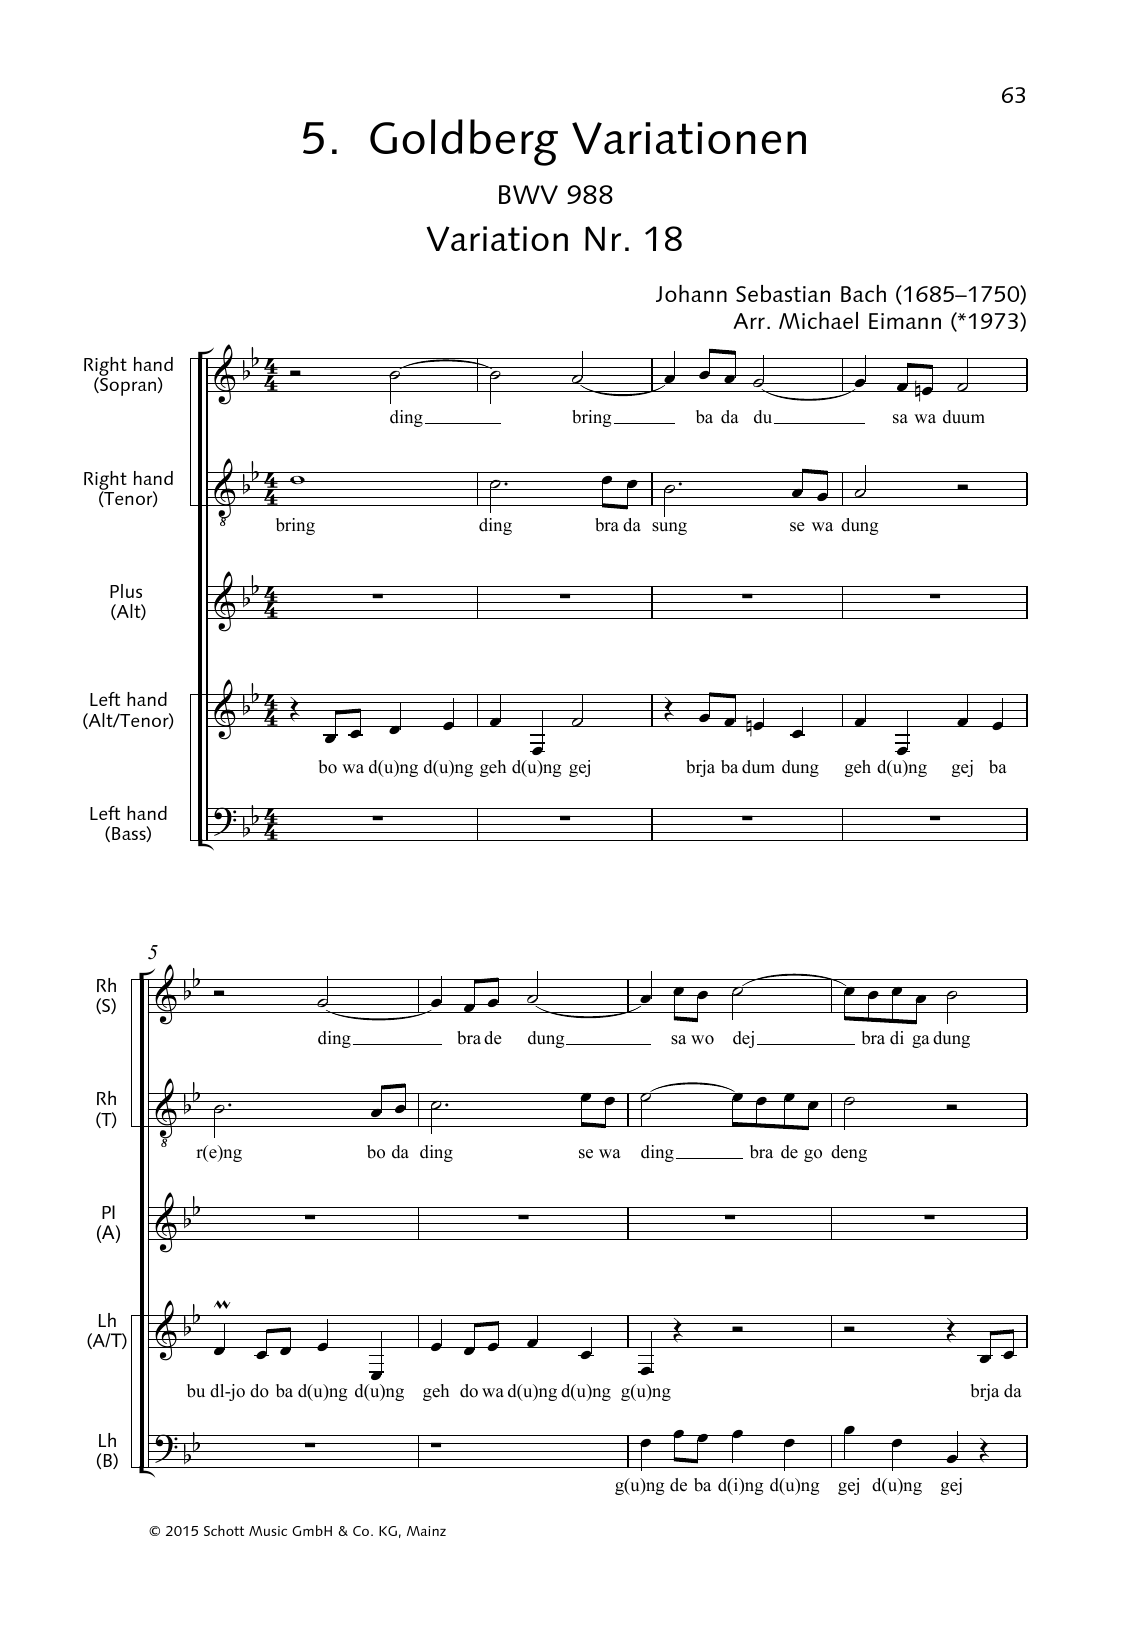 Johann Sebastian Bach Goldberg Variations, Variation No. 18 Sheet Music Notes & Chords for Choral - Download or Print PDF